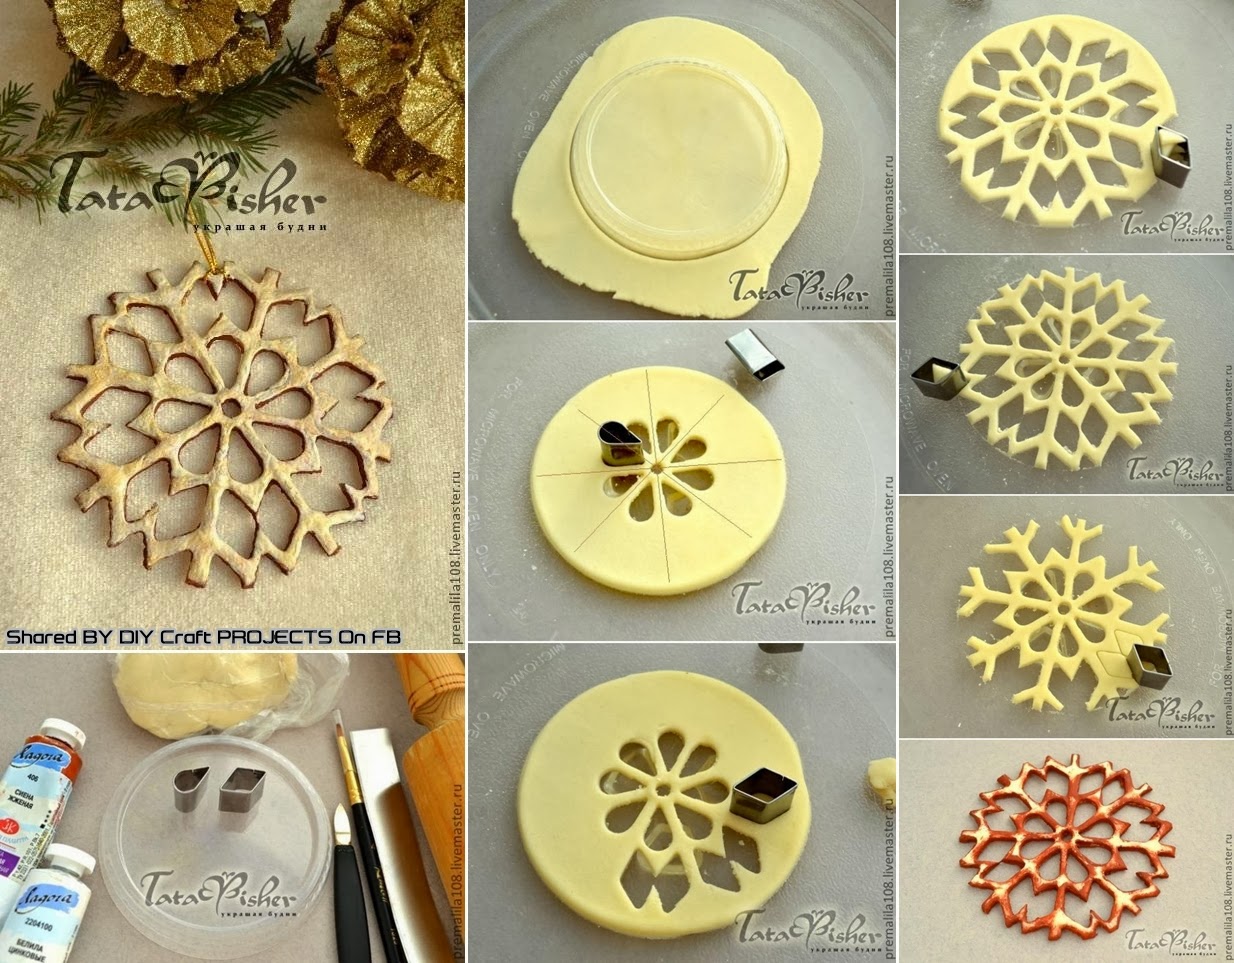  DIY  Salt Dough  Snowflakes DIY  Craft Projects